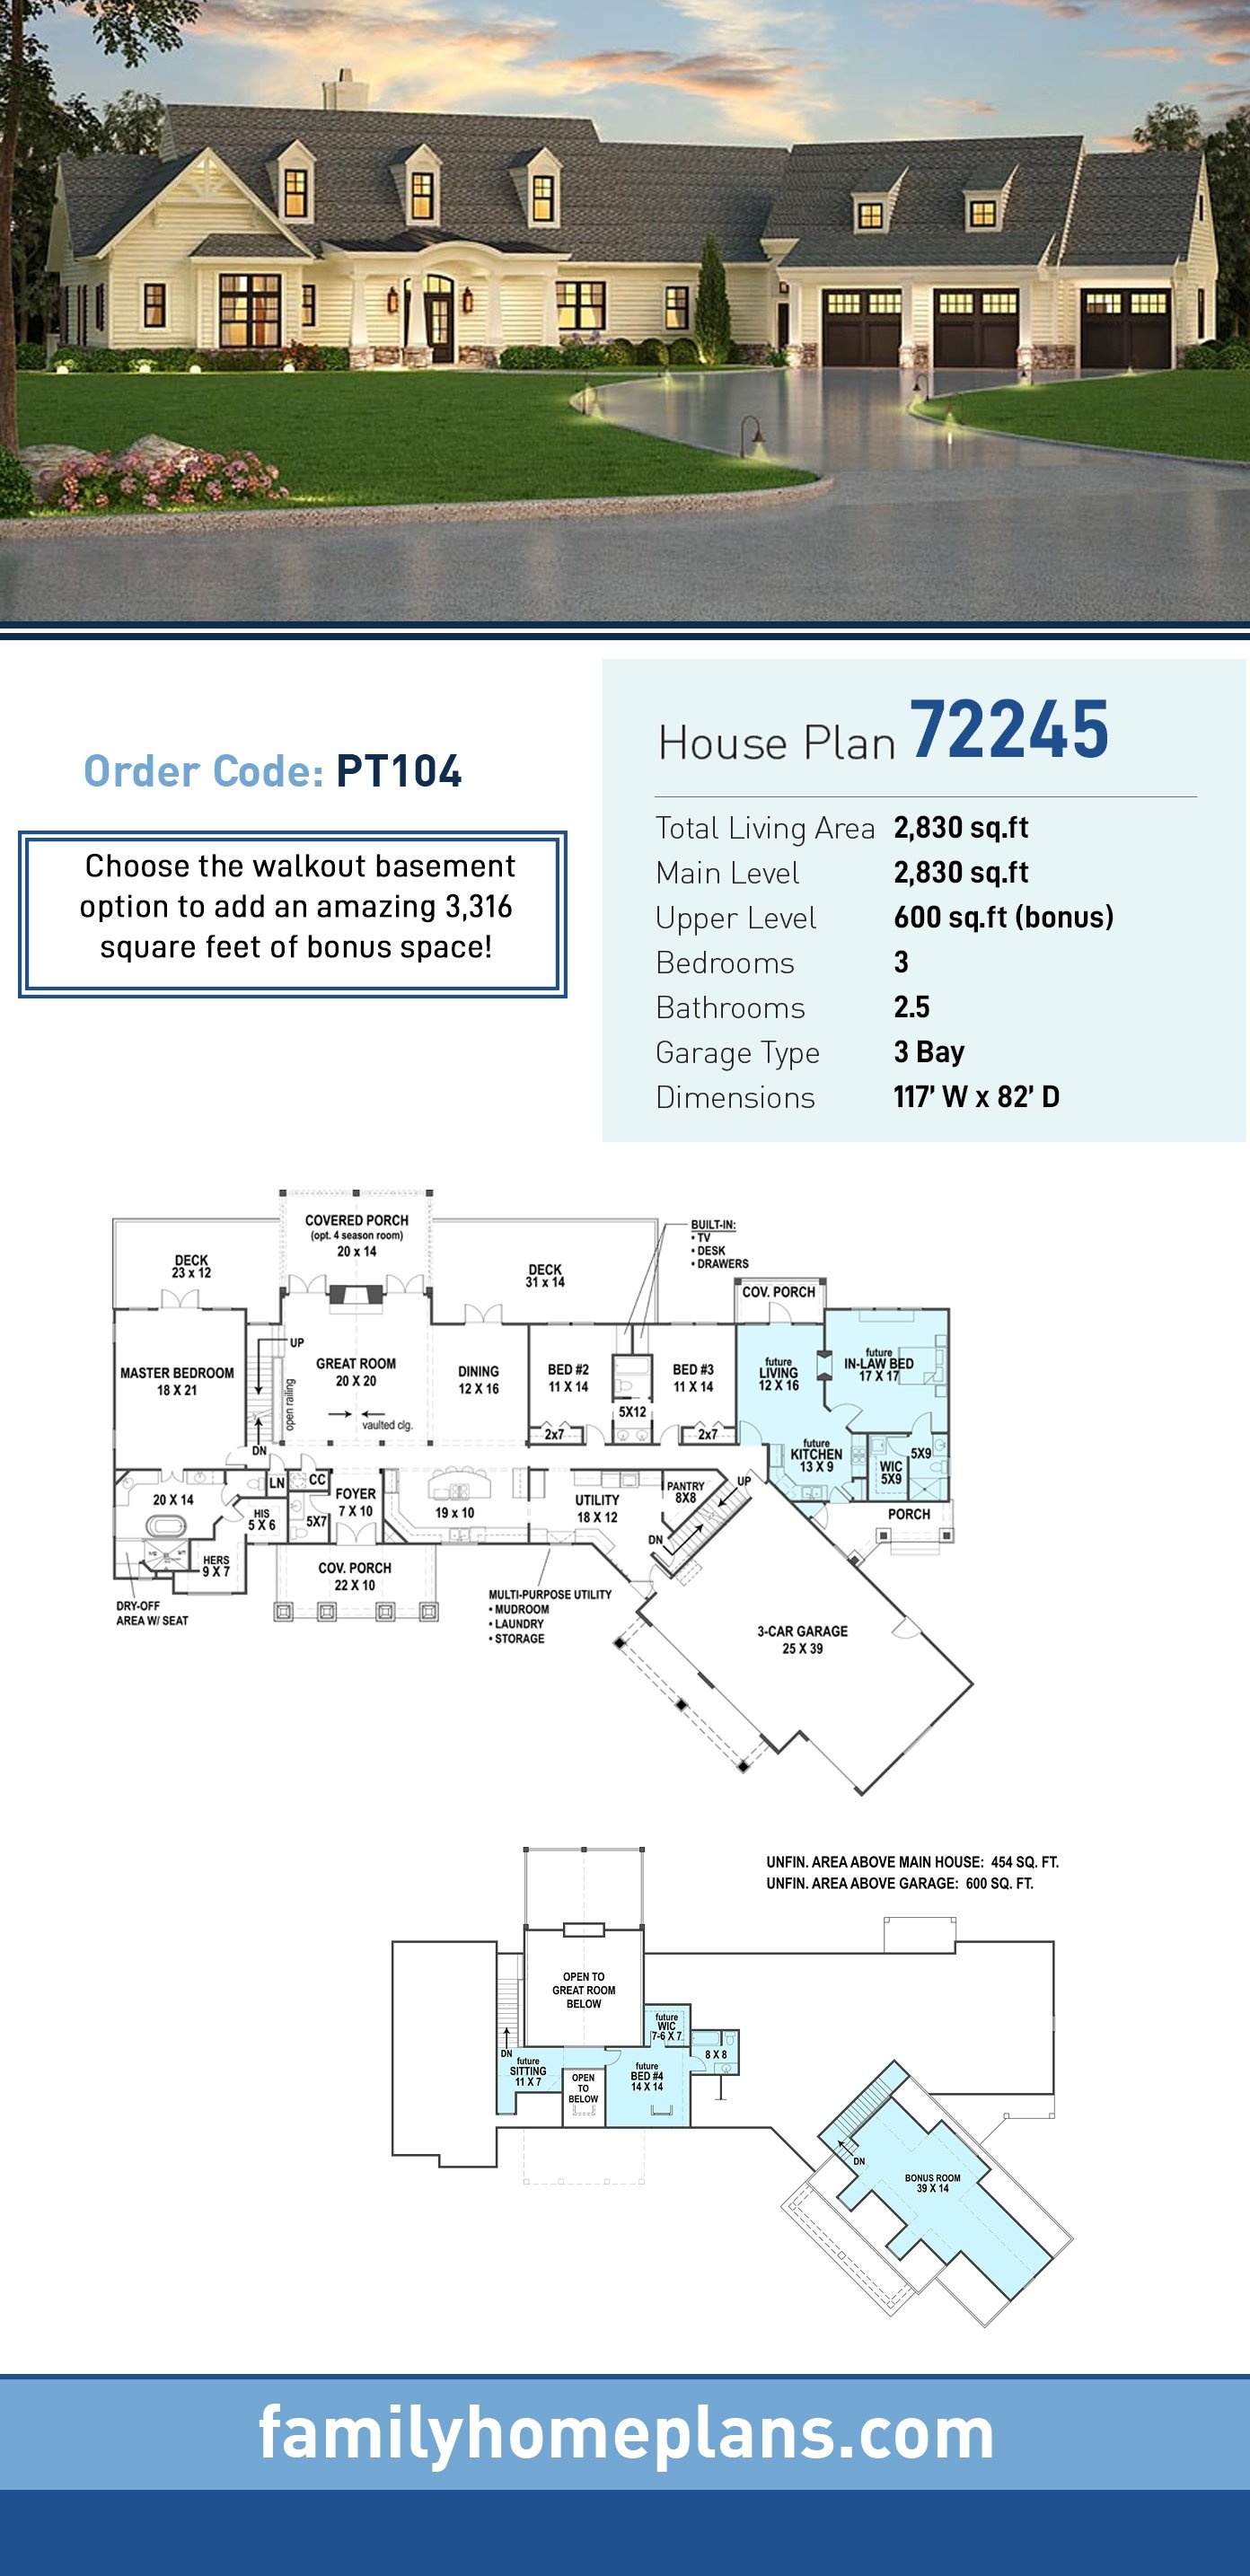 House Plan 72245